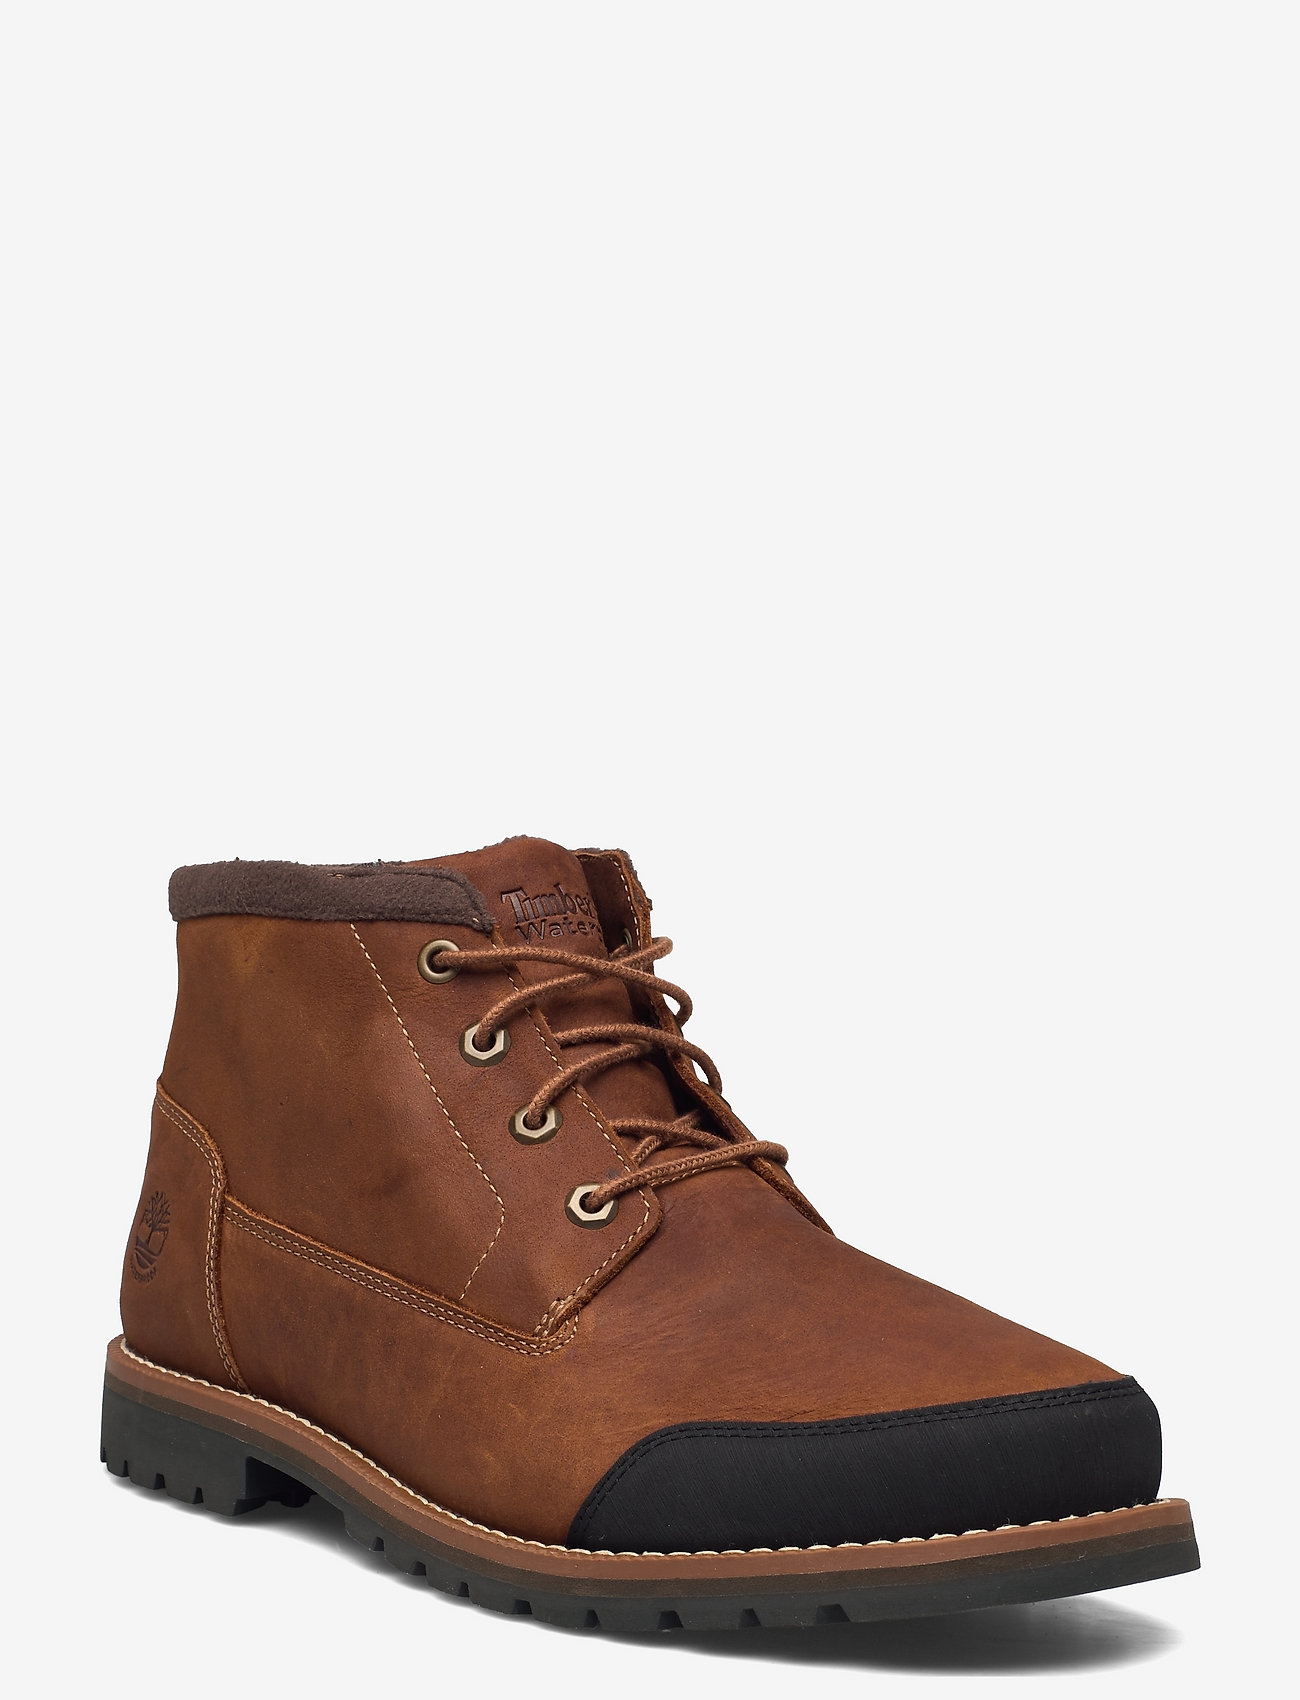 Timberland Larchmont Ii Wl Wp Chukka - Laced boots | Boozt.com